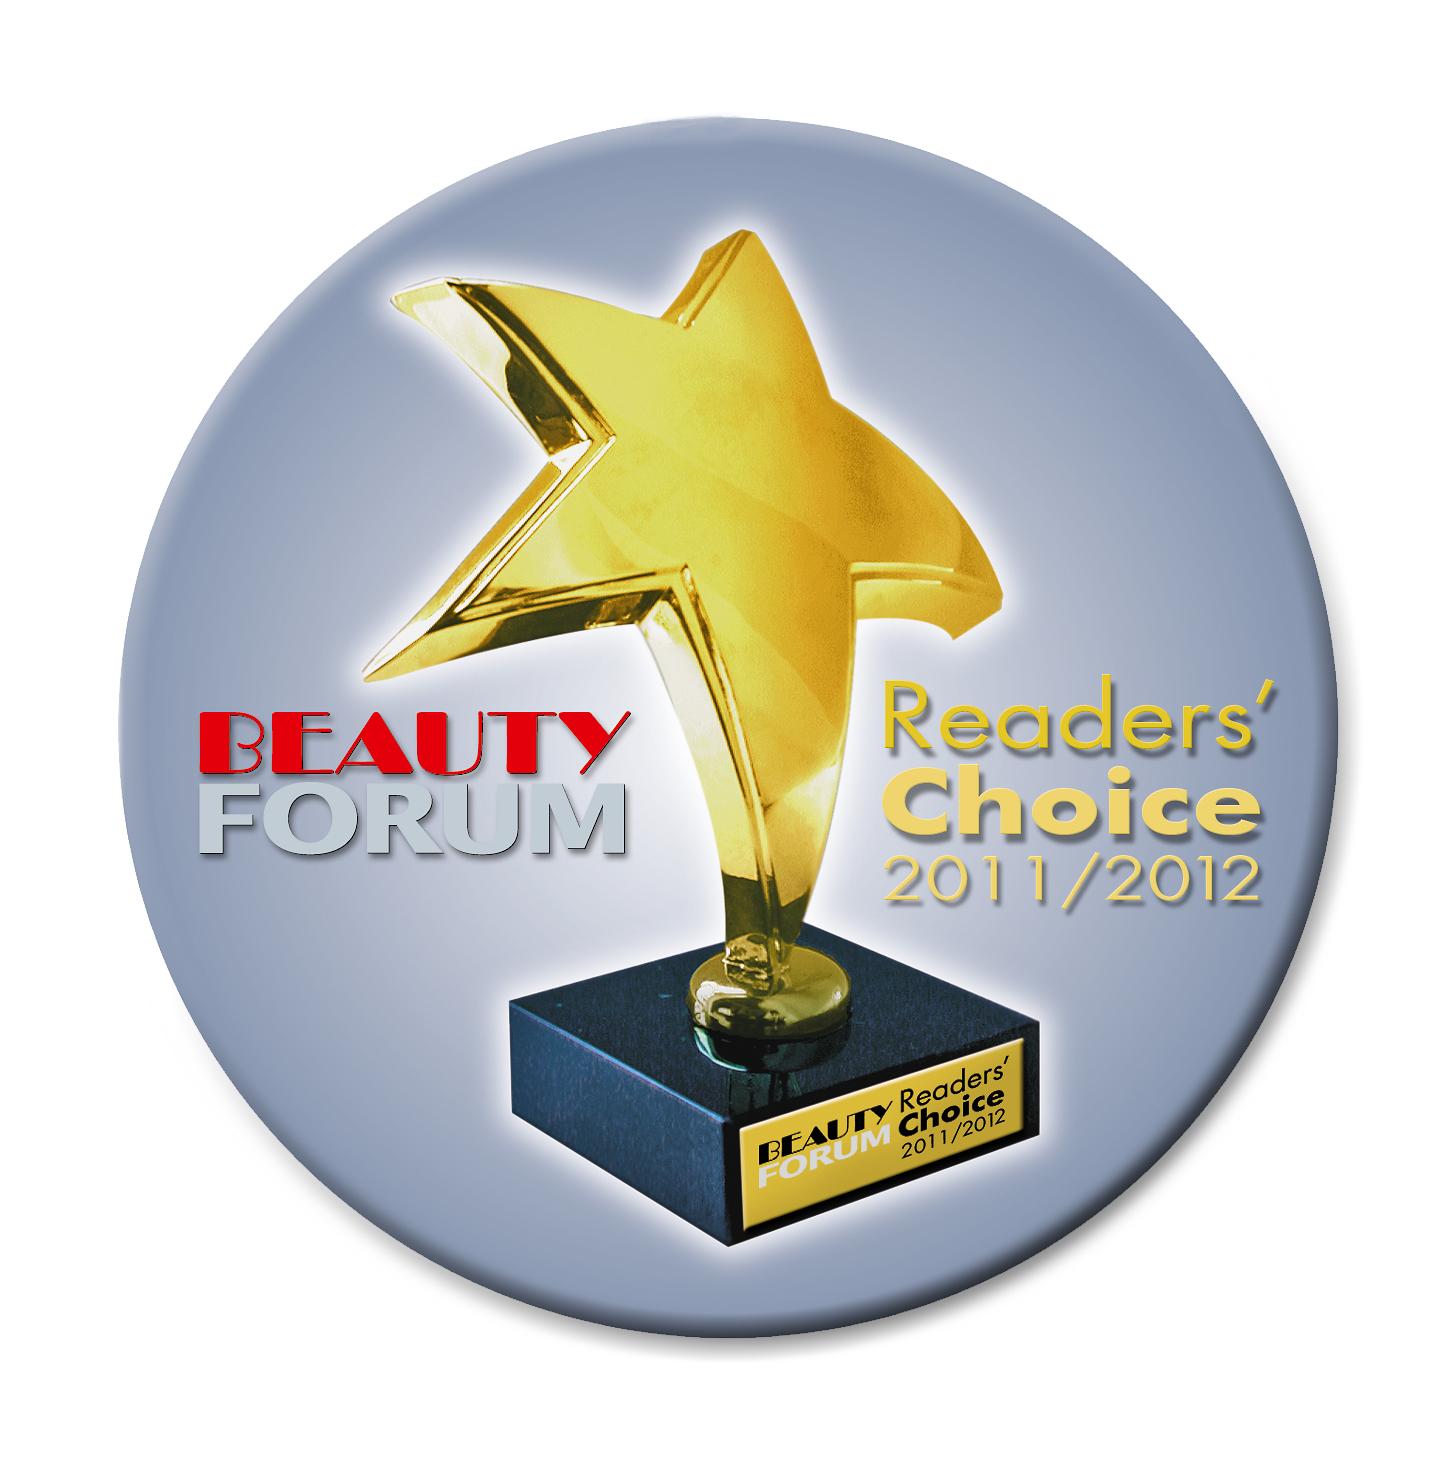 BEAUTY FORUM Reader’s Choice Award 2011 2012